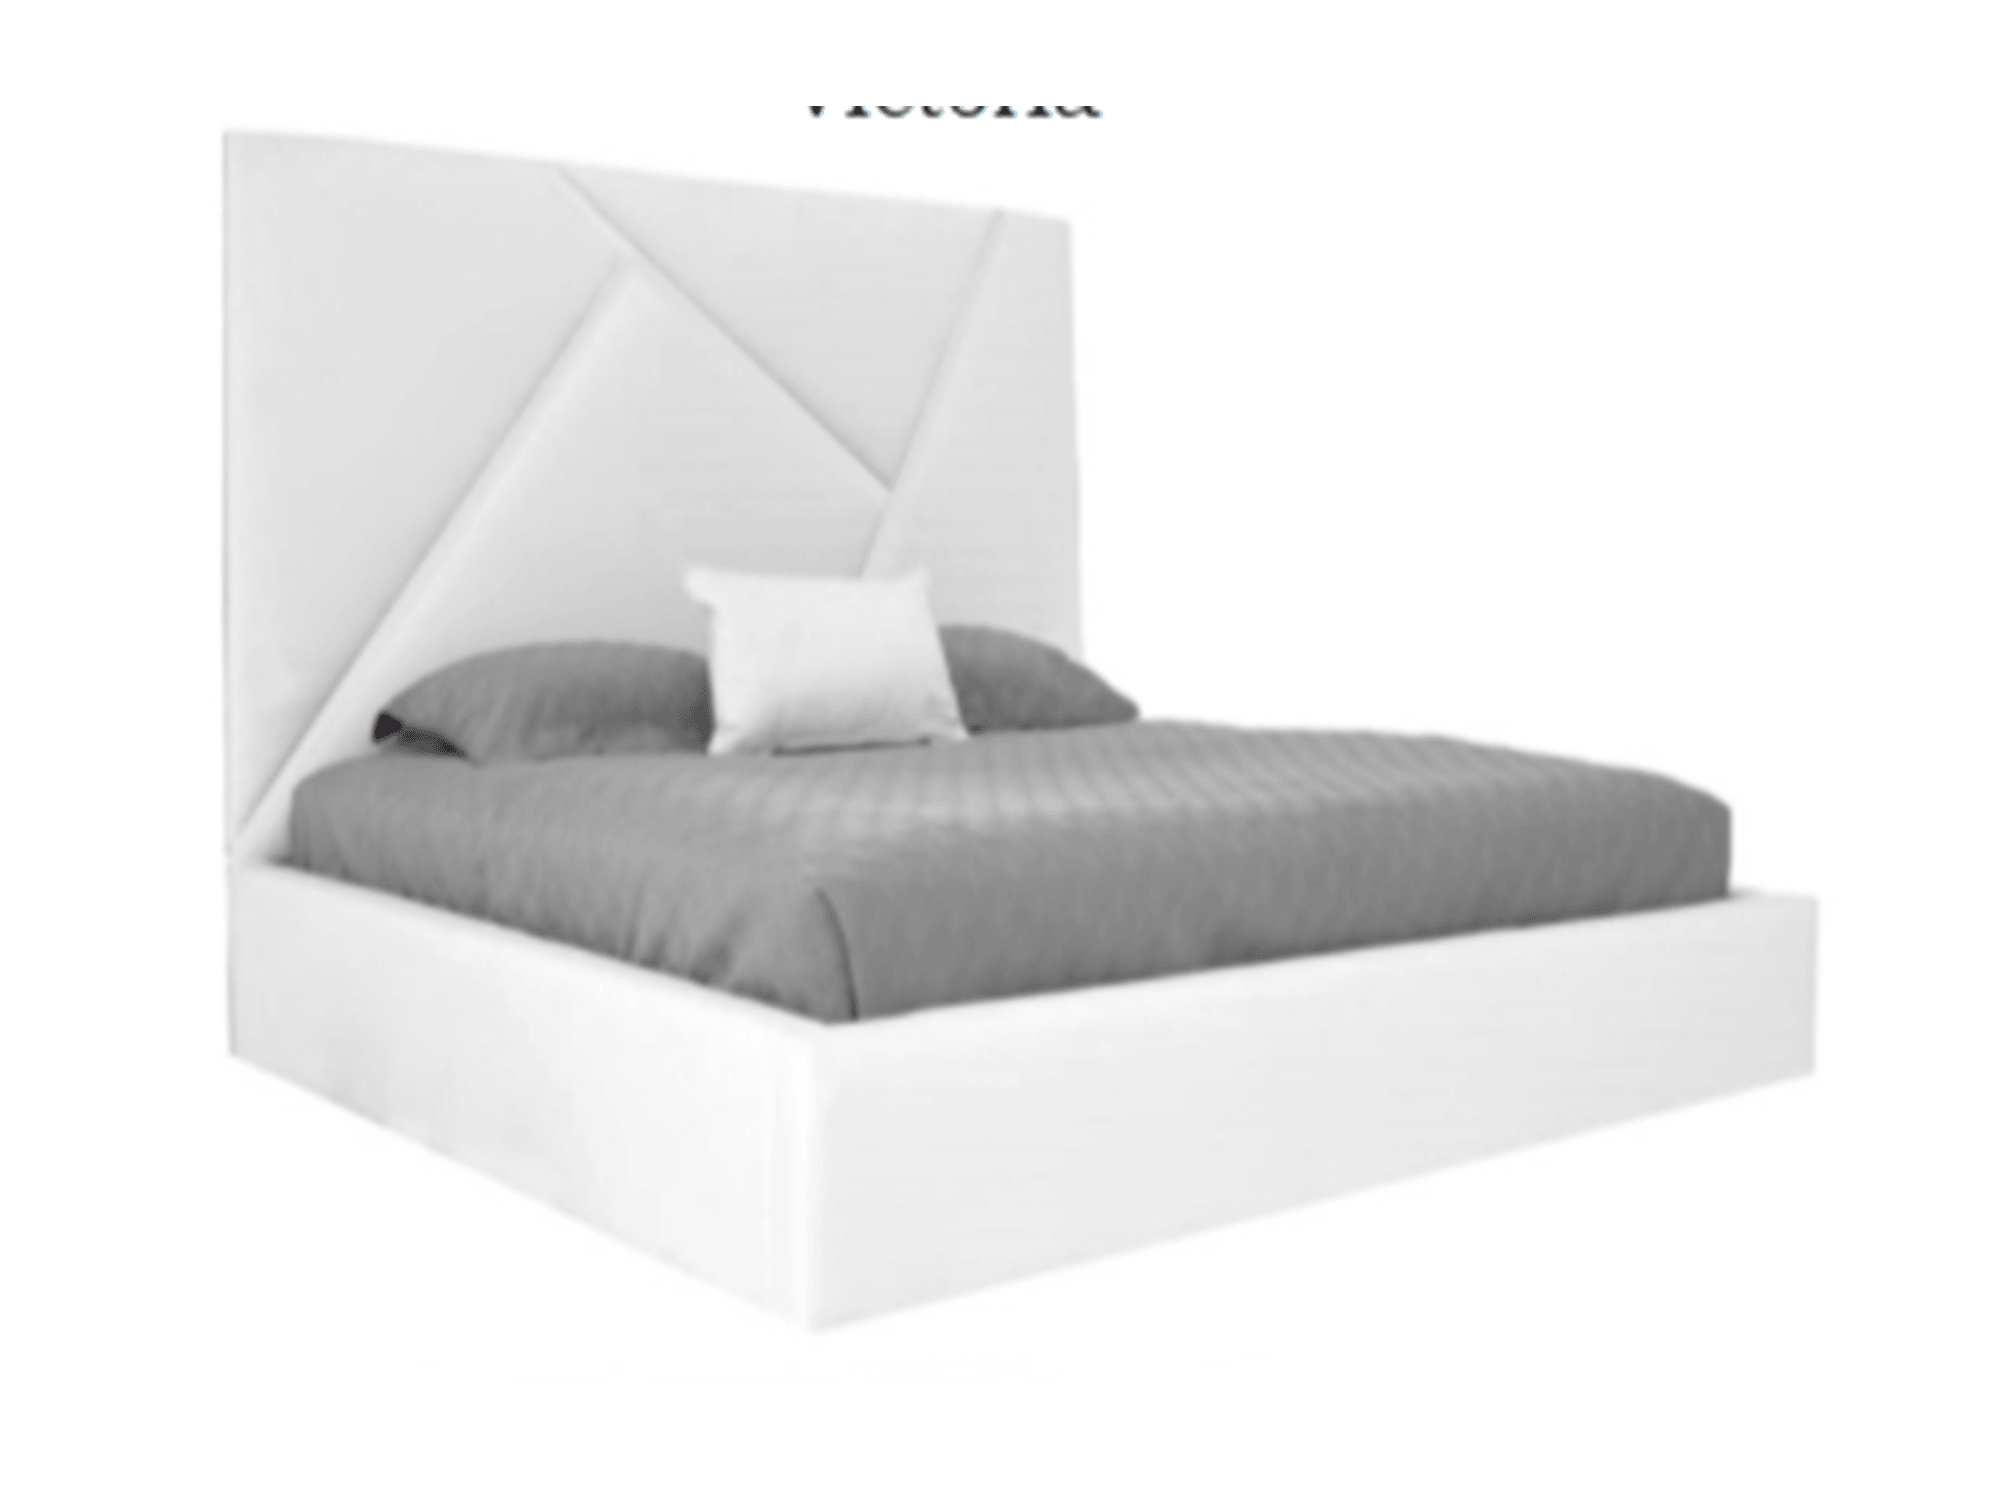 Ria custom bed 60" - Euro Living Furniture